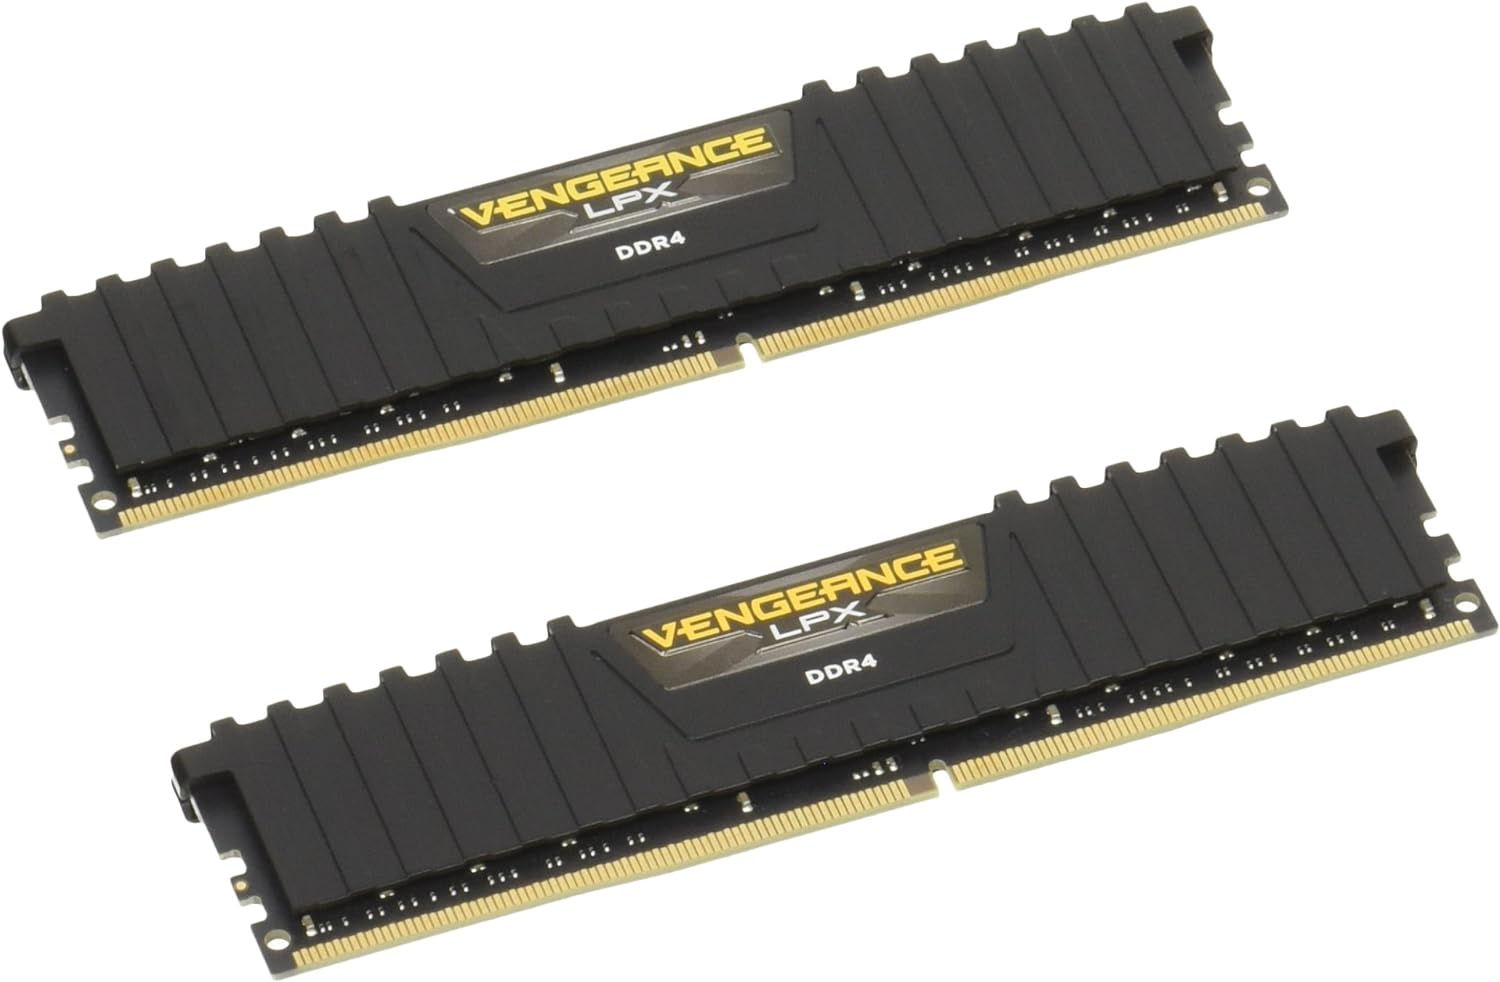 Corsair Vengeance LPX 32GB 2x16GB DDR4 DRAM 2133MHz C13 Memory Kit Black ‎CMK32GX4M2A2133C13